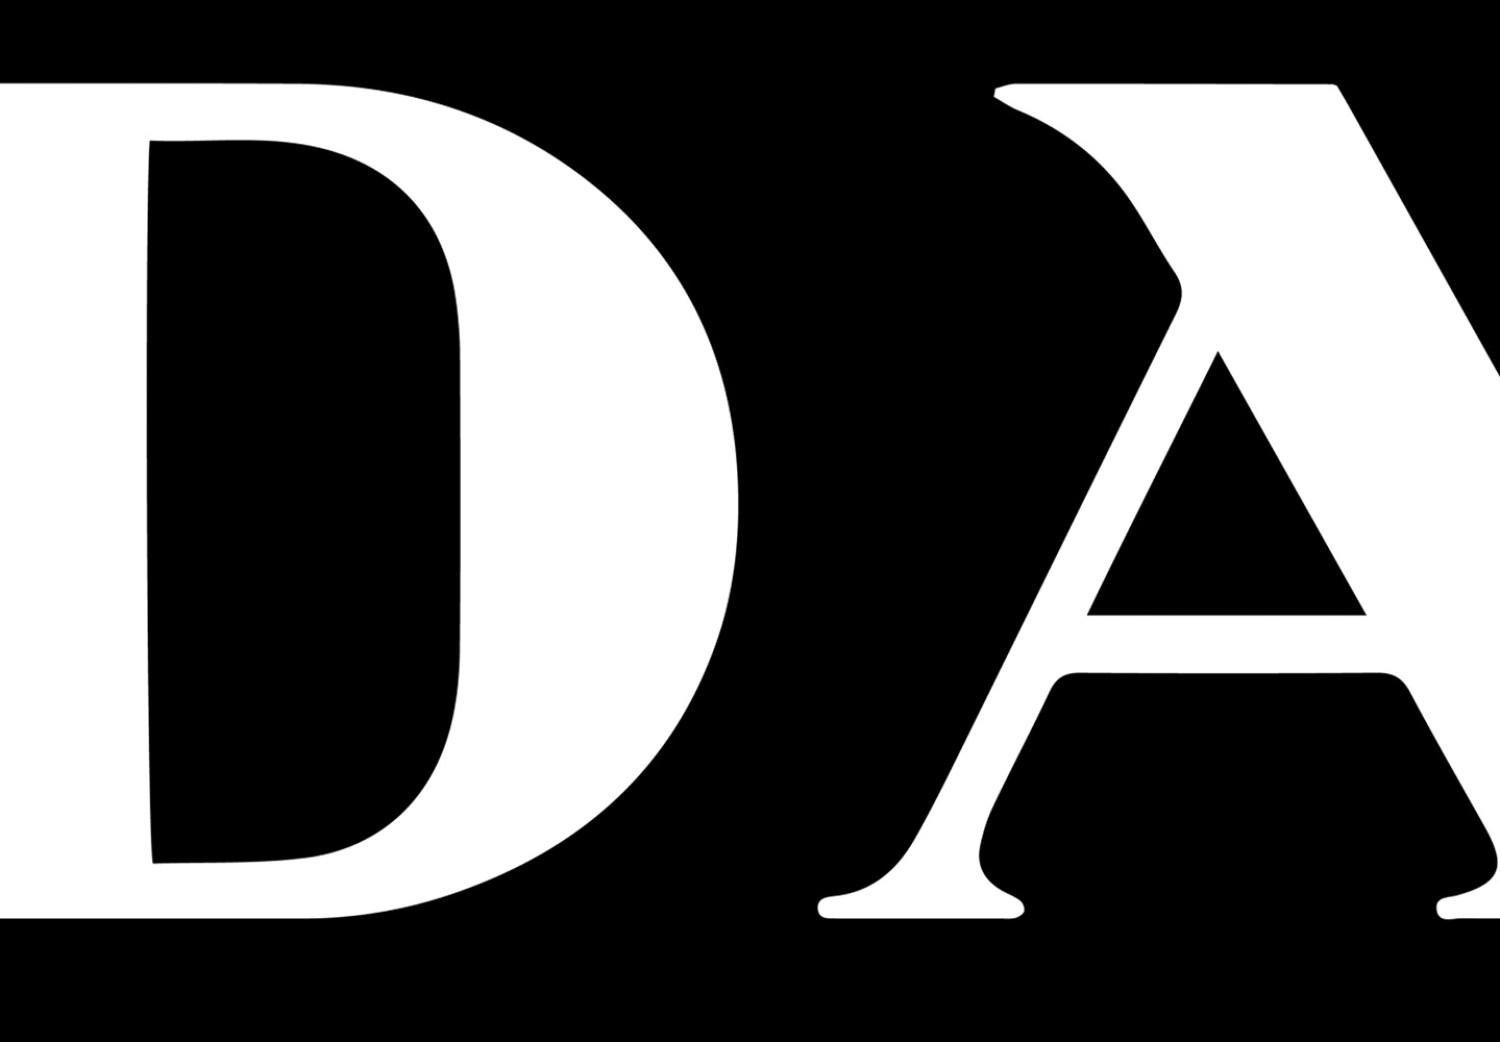 Poster Prada in Black - white English fashion brand name on a black background